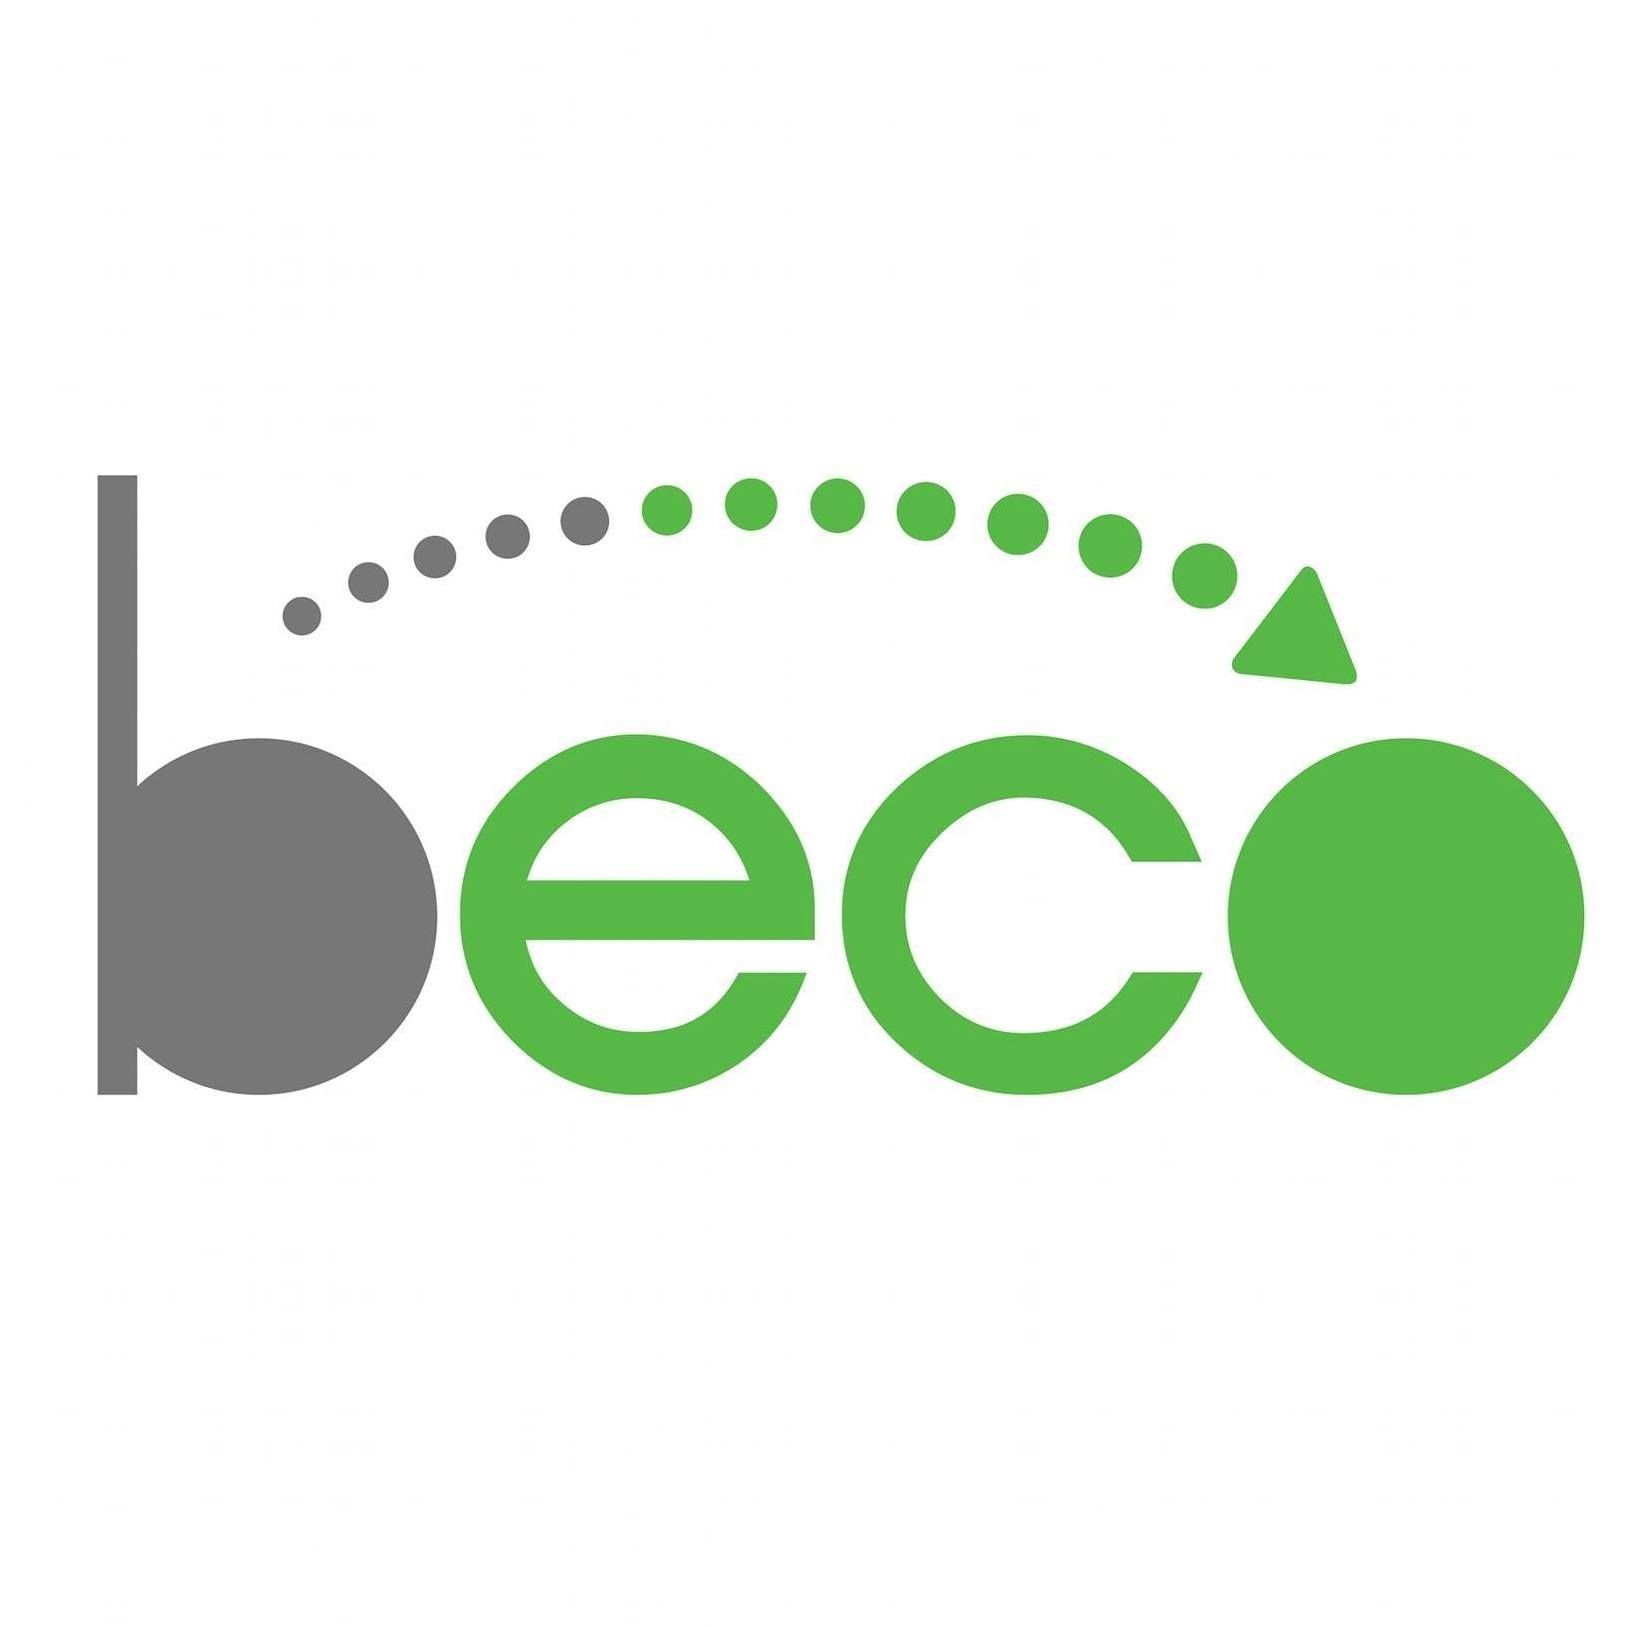 Ecommerce, Beco: Akshay Varma, Aditya And Anuj Ruia: Making Eco-friendly  Choices Easy - Forbes India